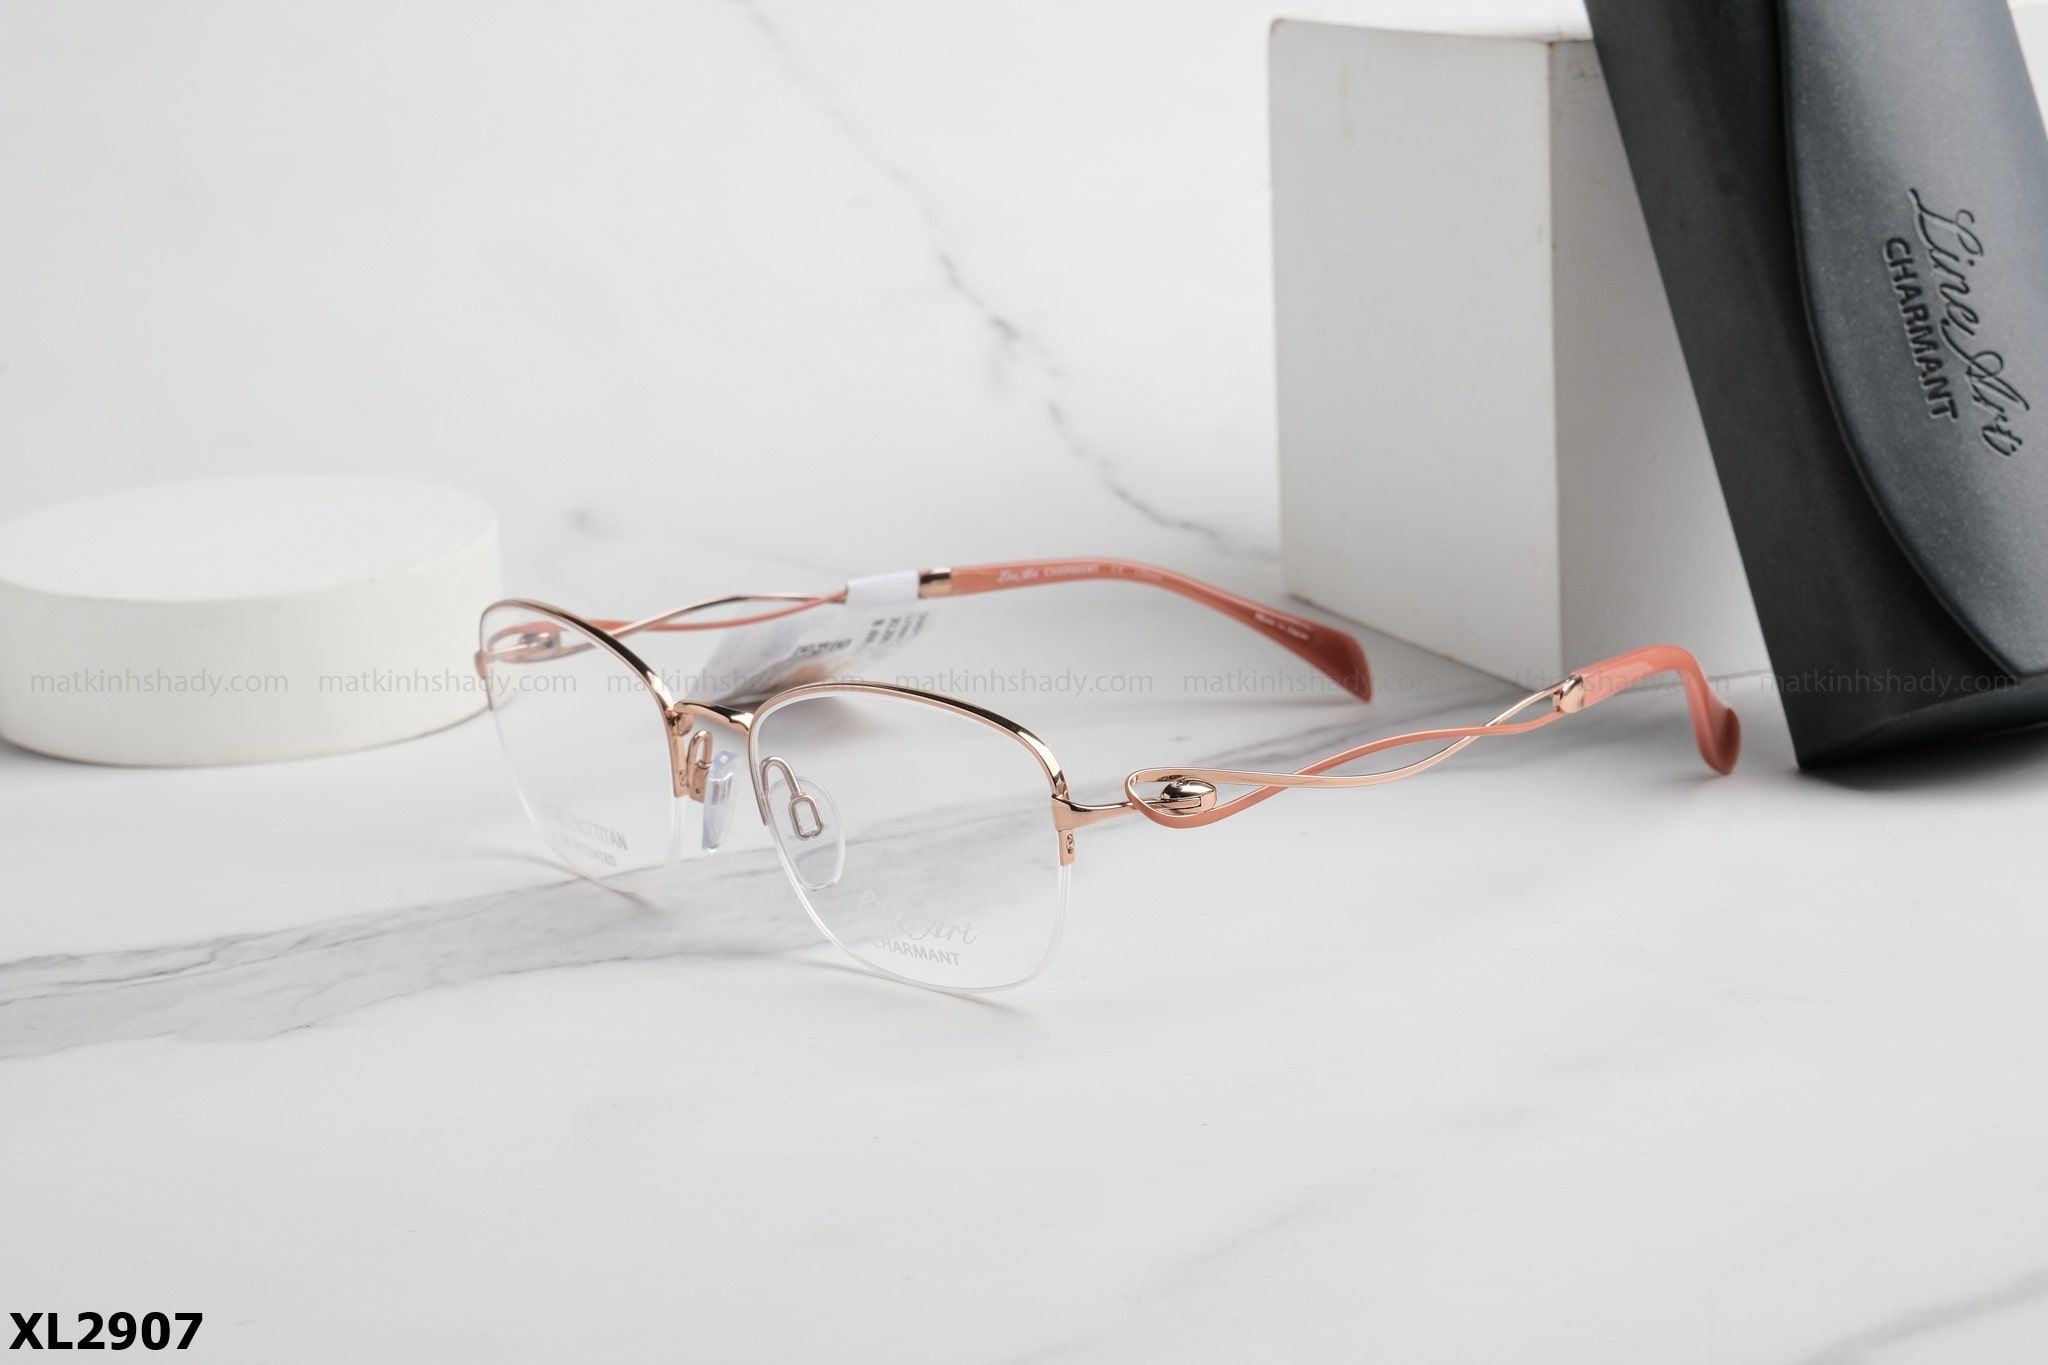  LINE ART CHARMANT Eyewear - Glasses - XL2907 